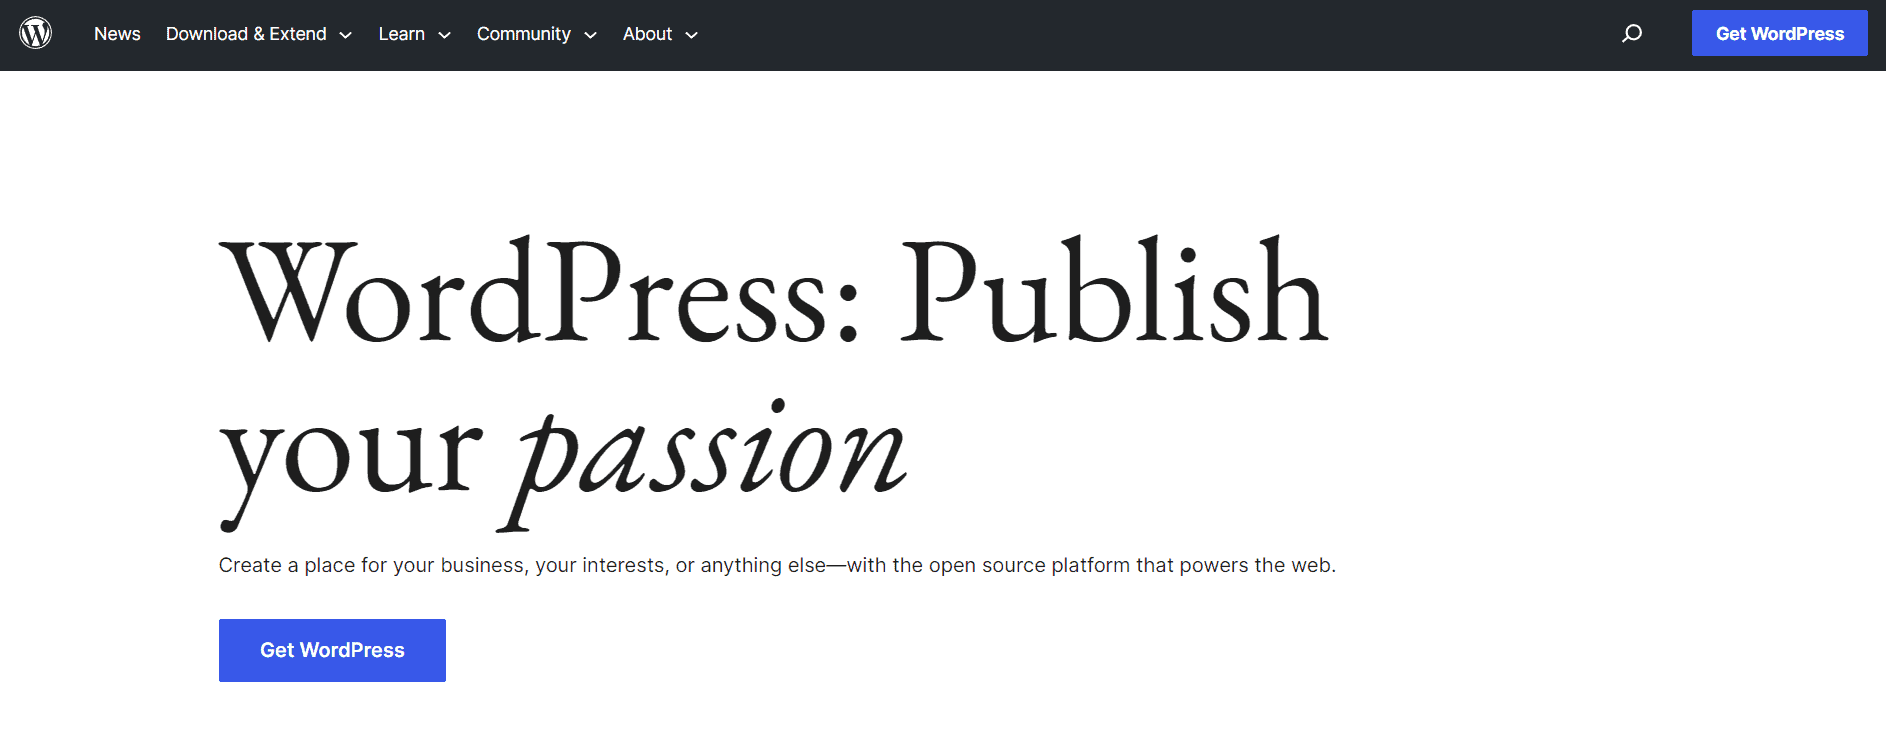 WordPress.org Overview